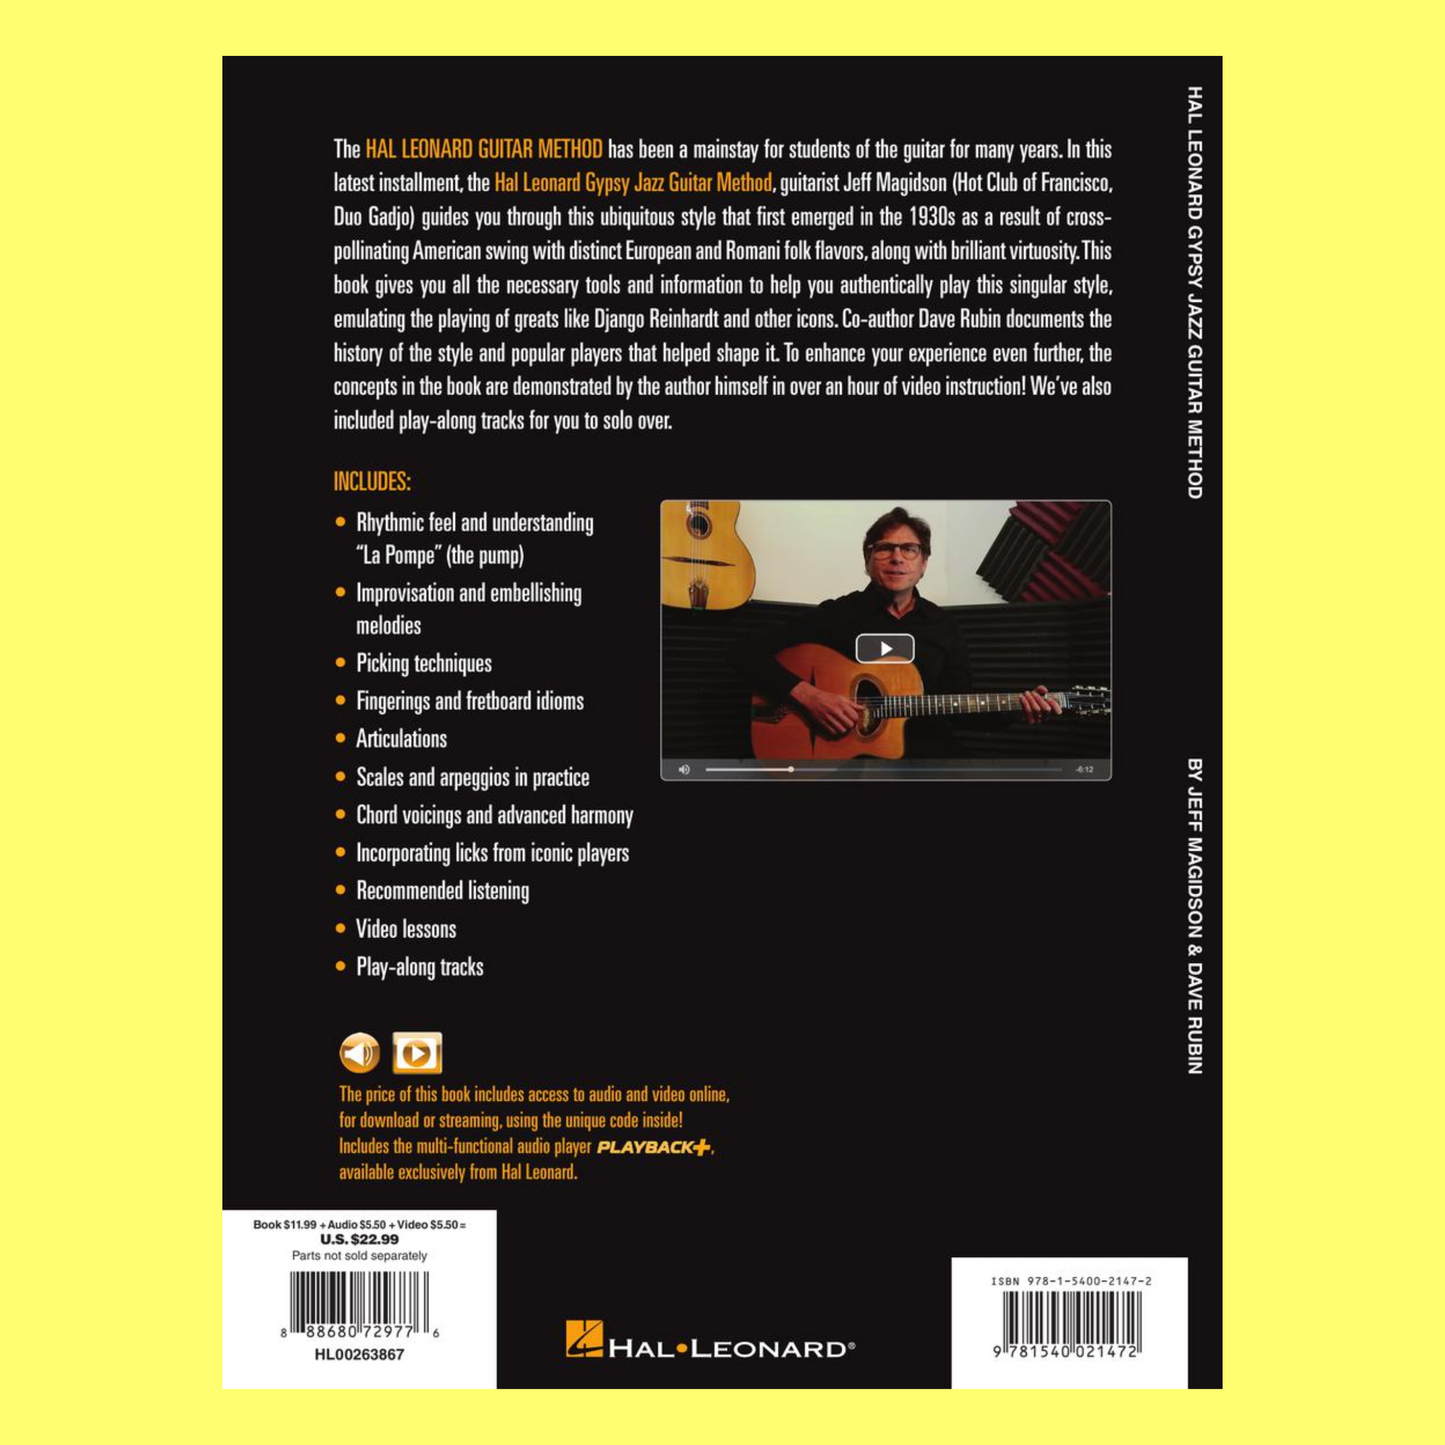 Hal Leonard Guitar Method - Gypsy Jazz Guitar (Book/Olm)